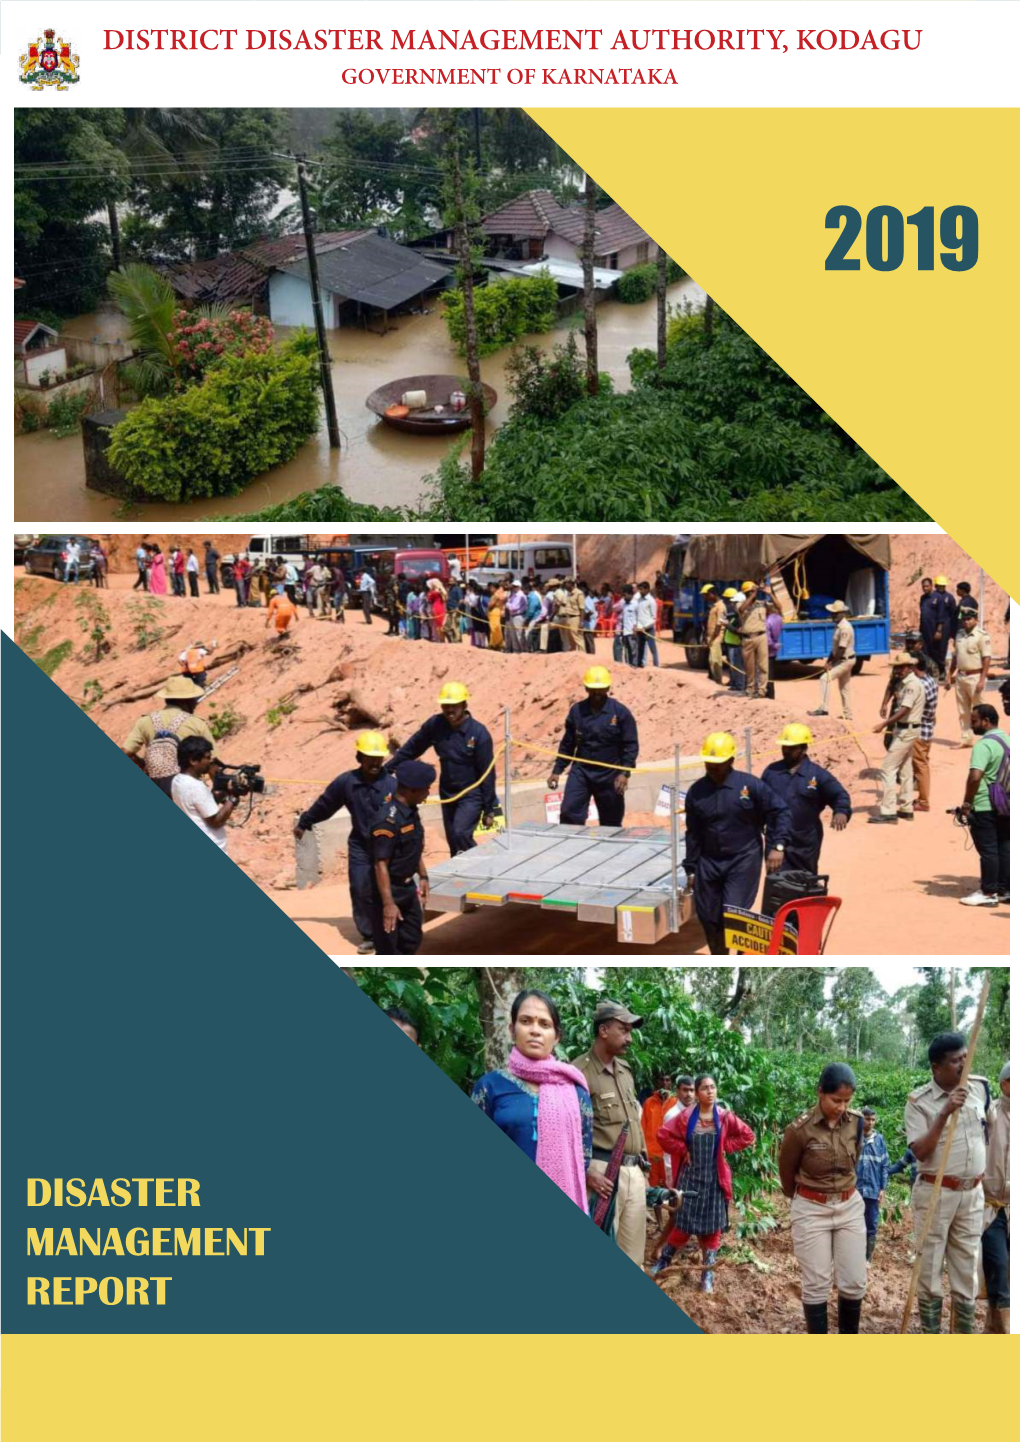 Disaster Management Report District Disaster Management Authority, Kodagu Year 2019 Government of Karnataka